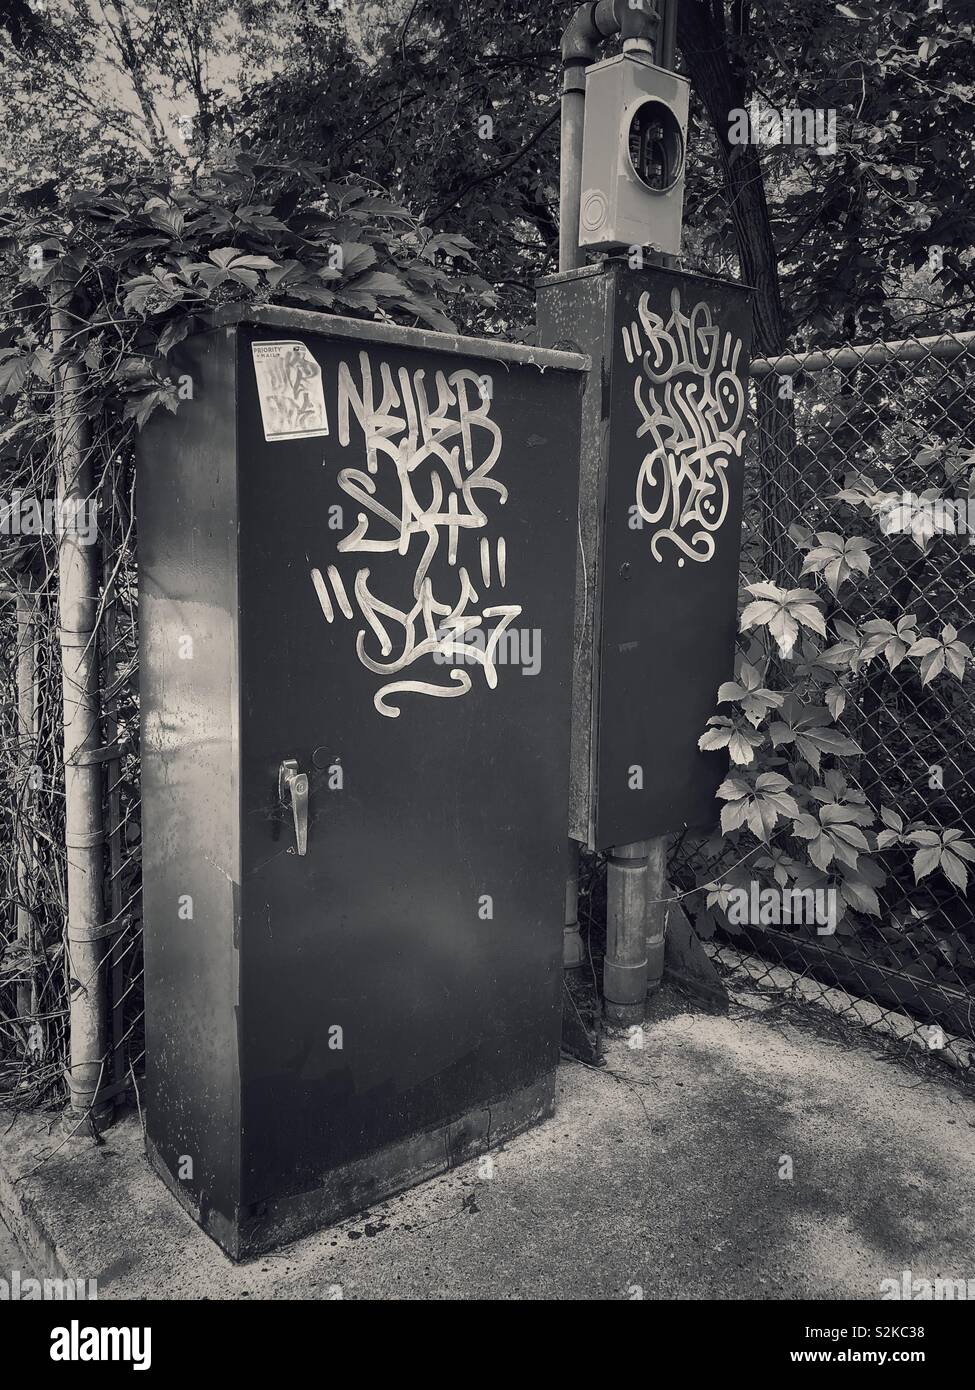 Stylized graffiti on some utility boxes. Stock Photo